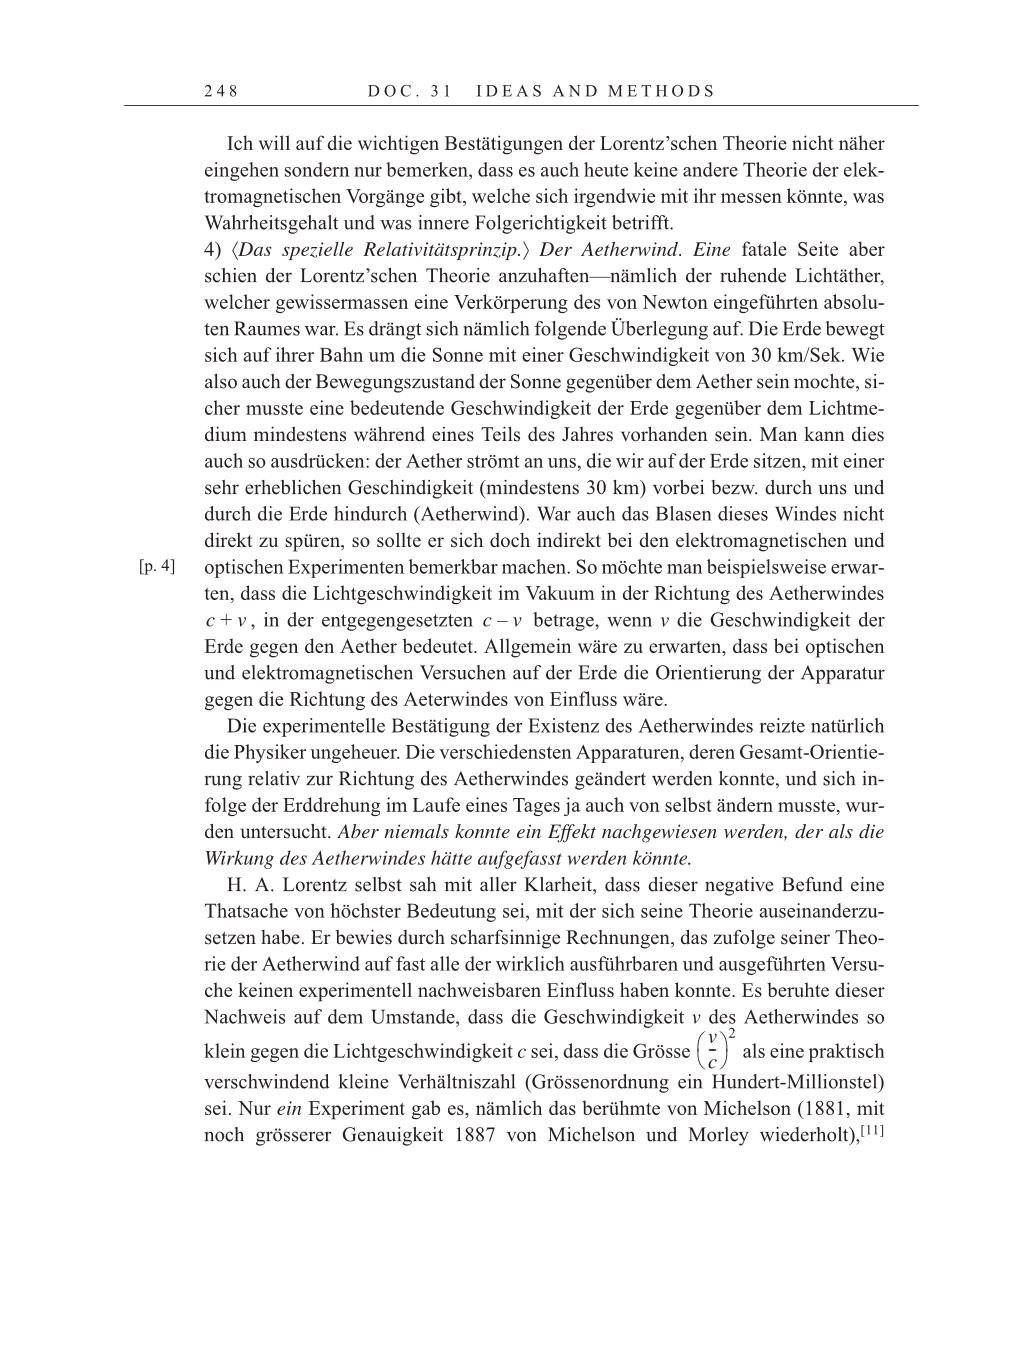 Volume 7: The Berlin Years: Writings, 1918-1921 page 248